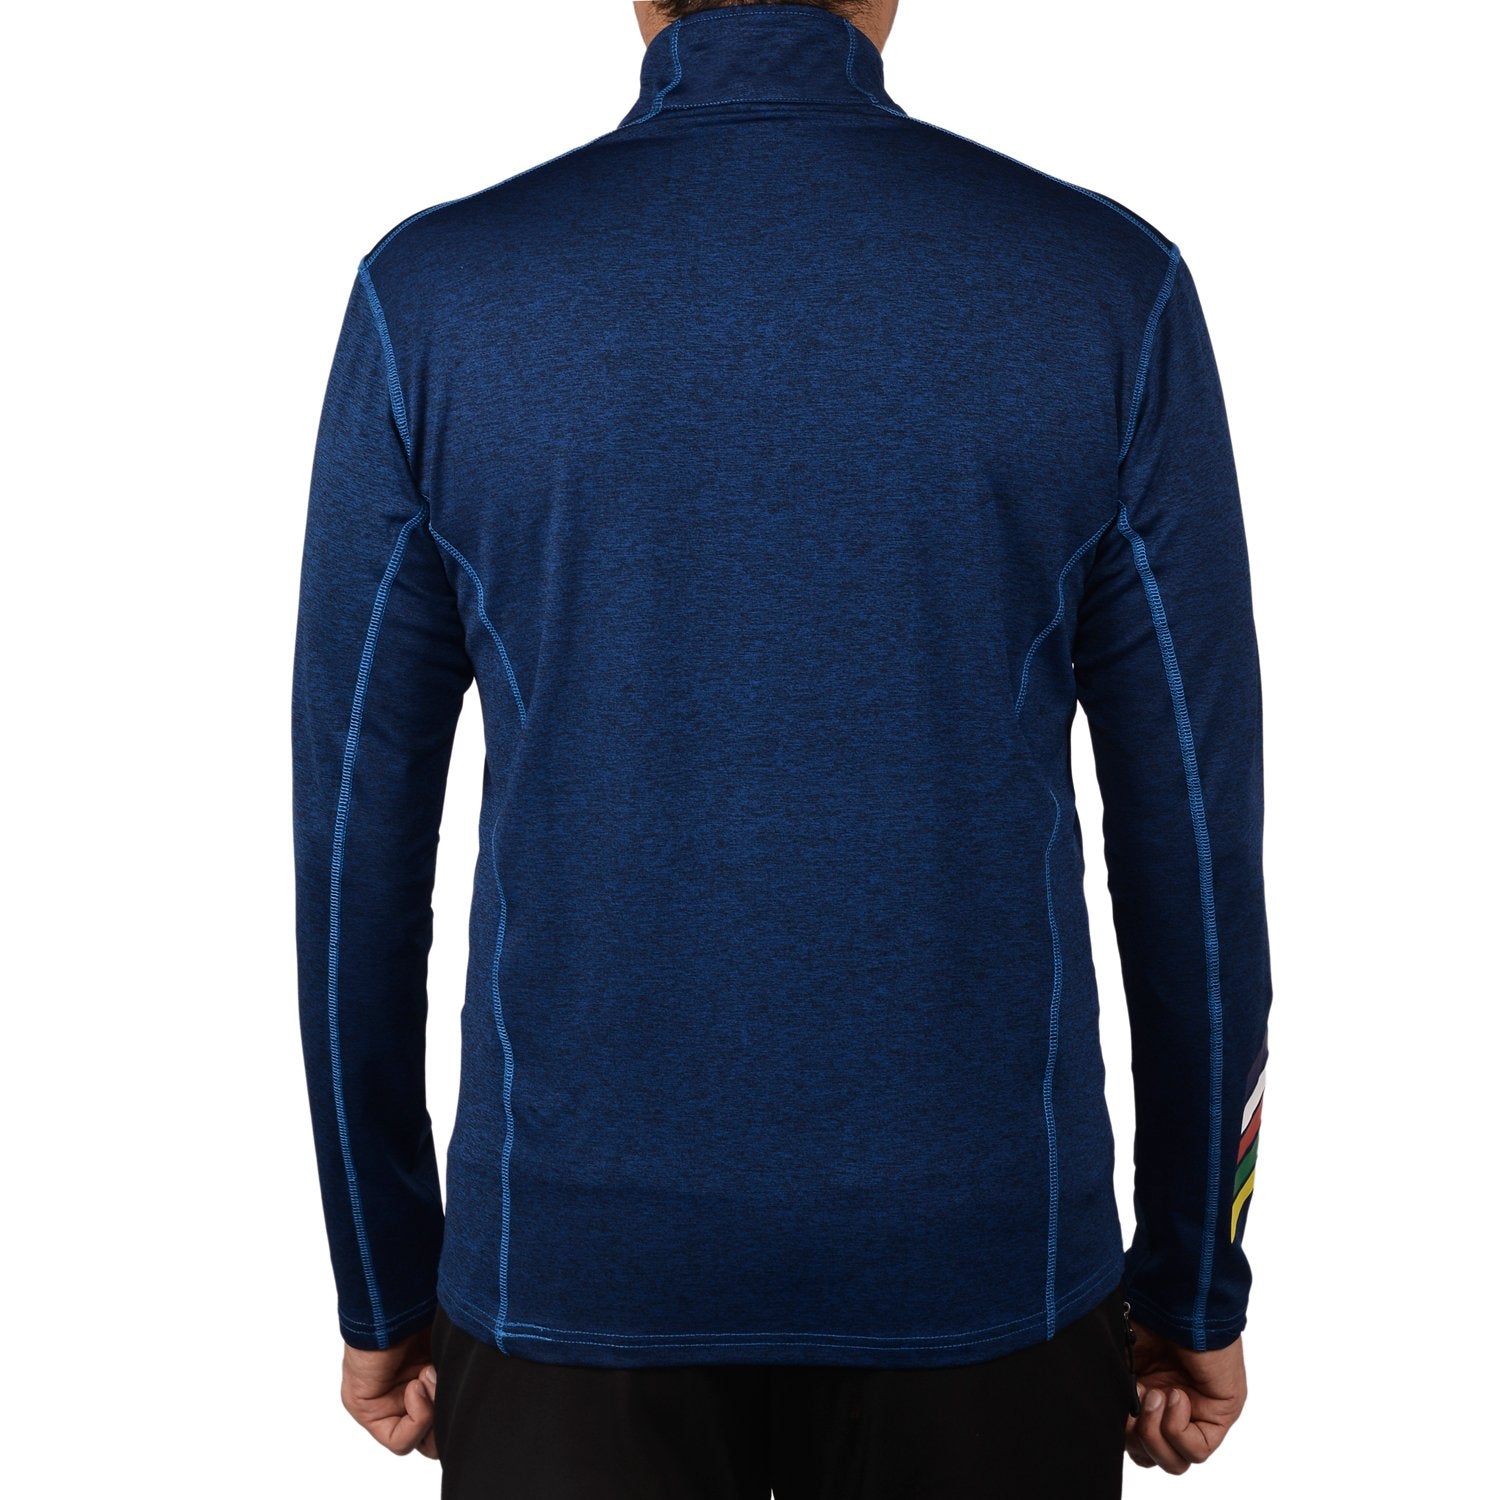 Buy Gokyo K2 Melange Trekking Tshirt | Trekking & Hiking T-shirts at Gokyo Outdoor Clothing & Gear